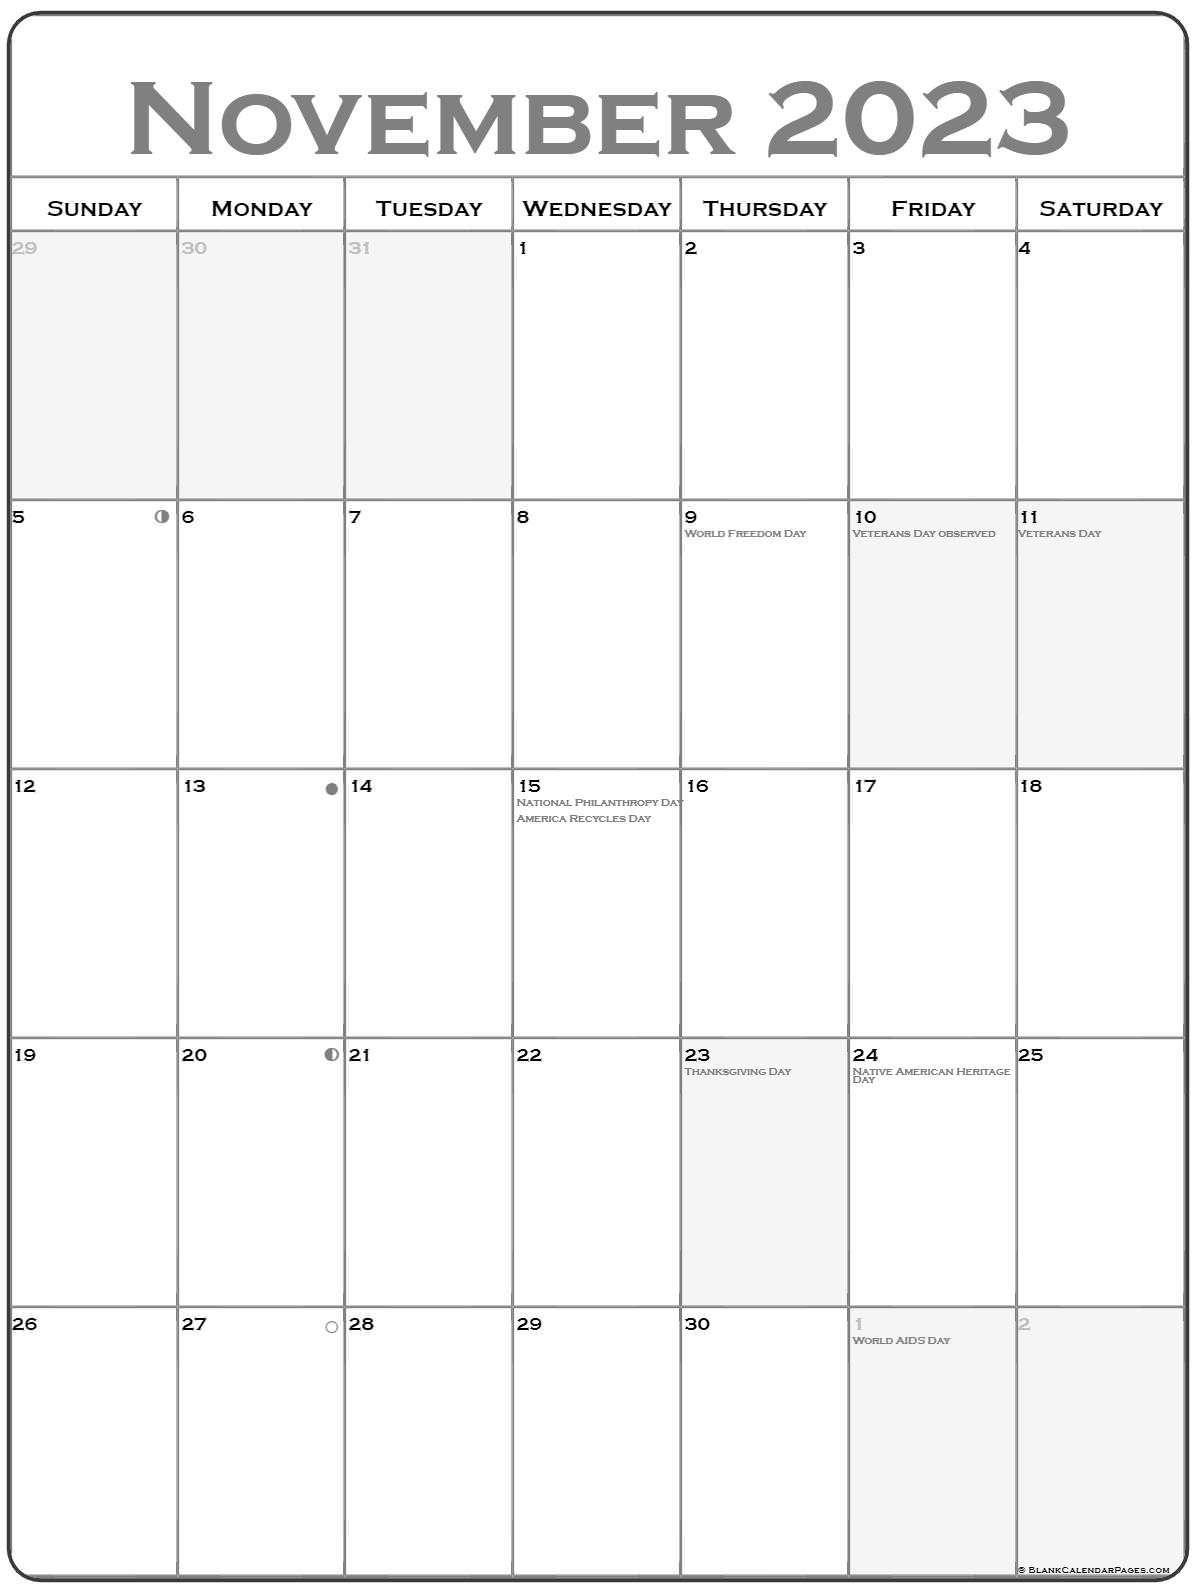 november-2023-calendar-recette-2023